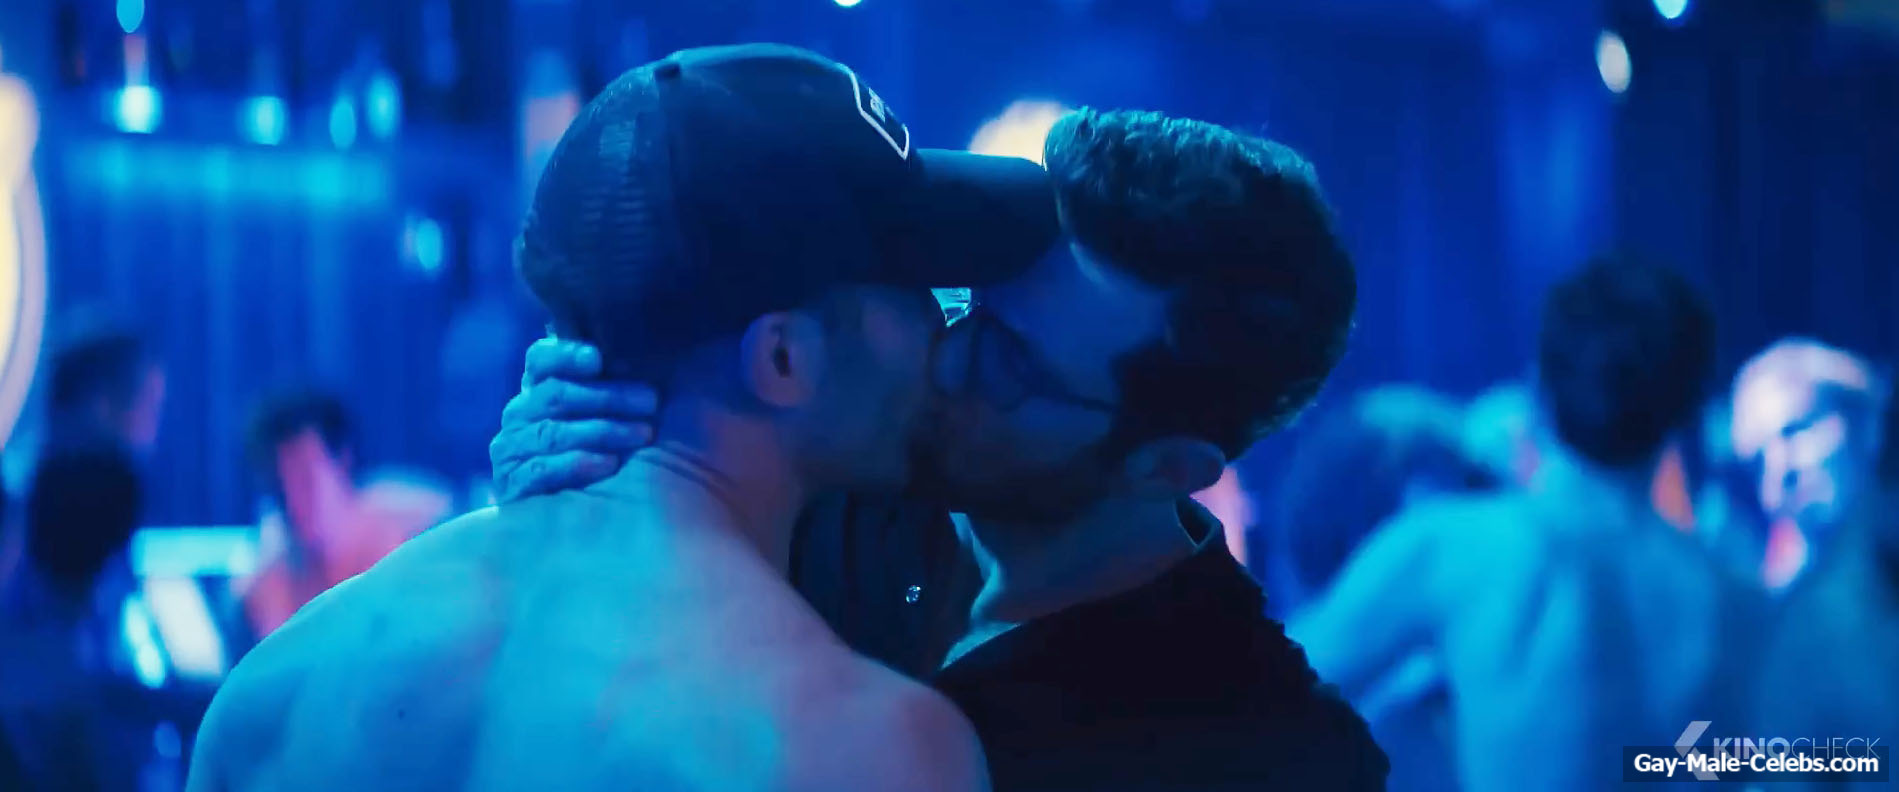 Billy Eichner and Luke Macfarlane Nude Gay Sex in Bros